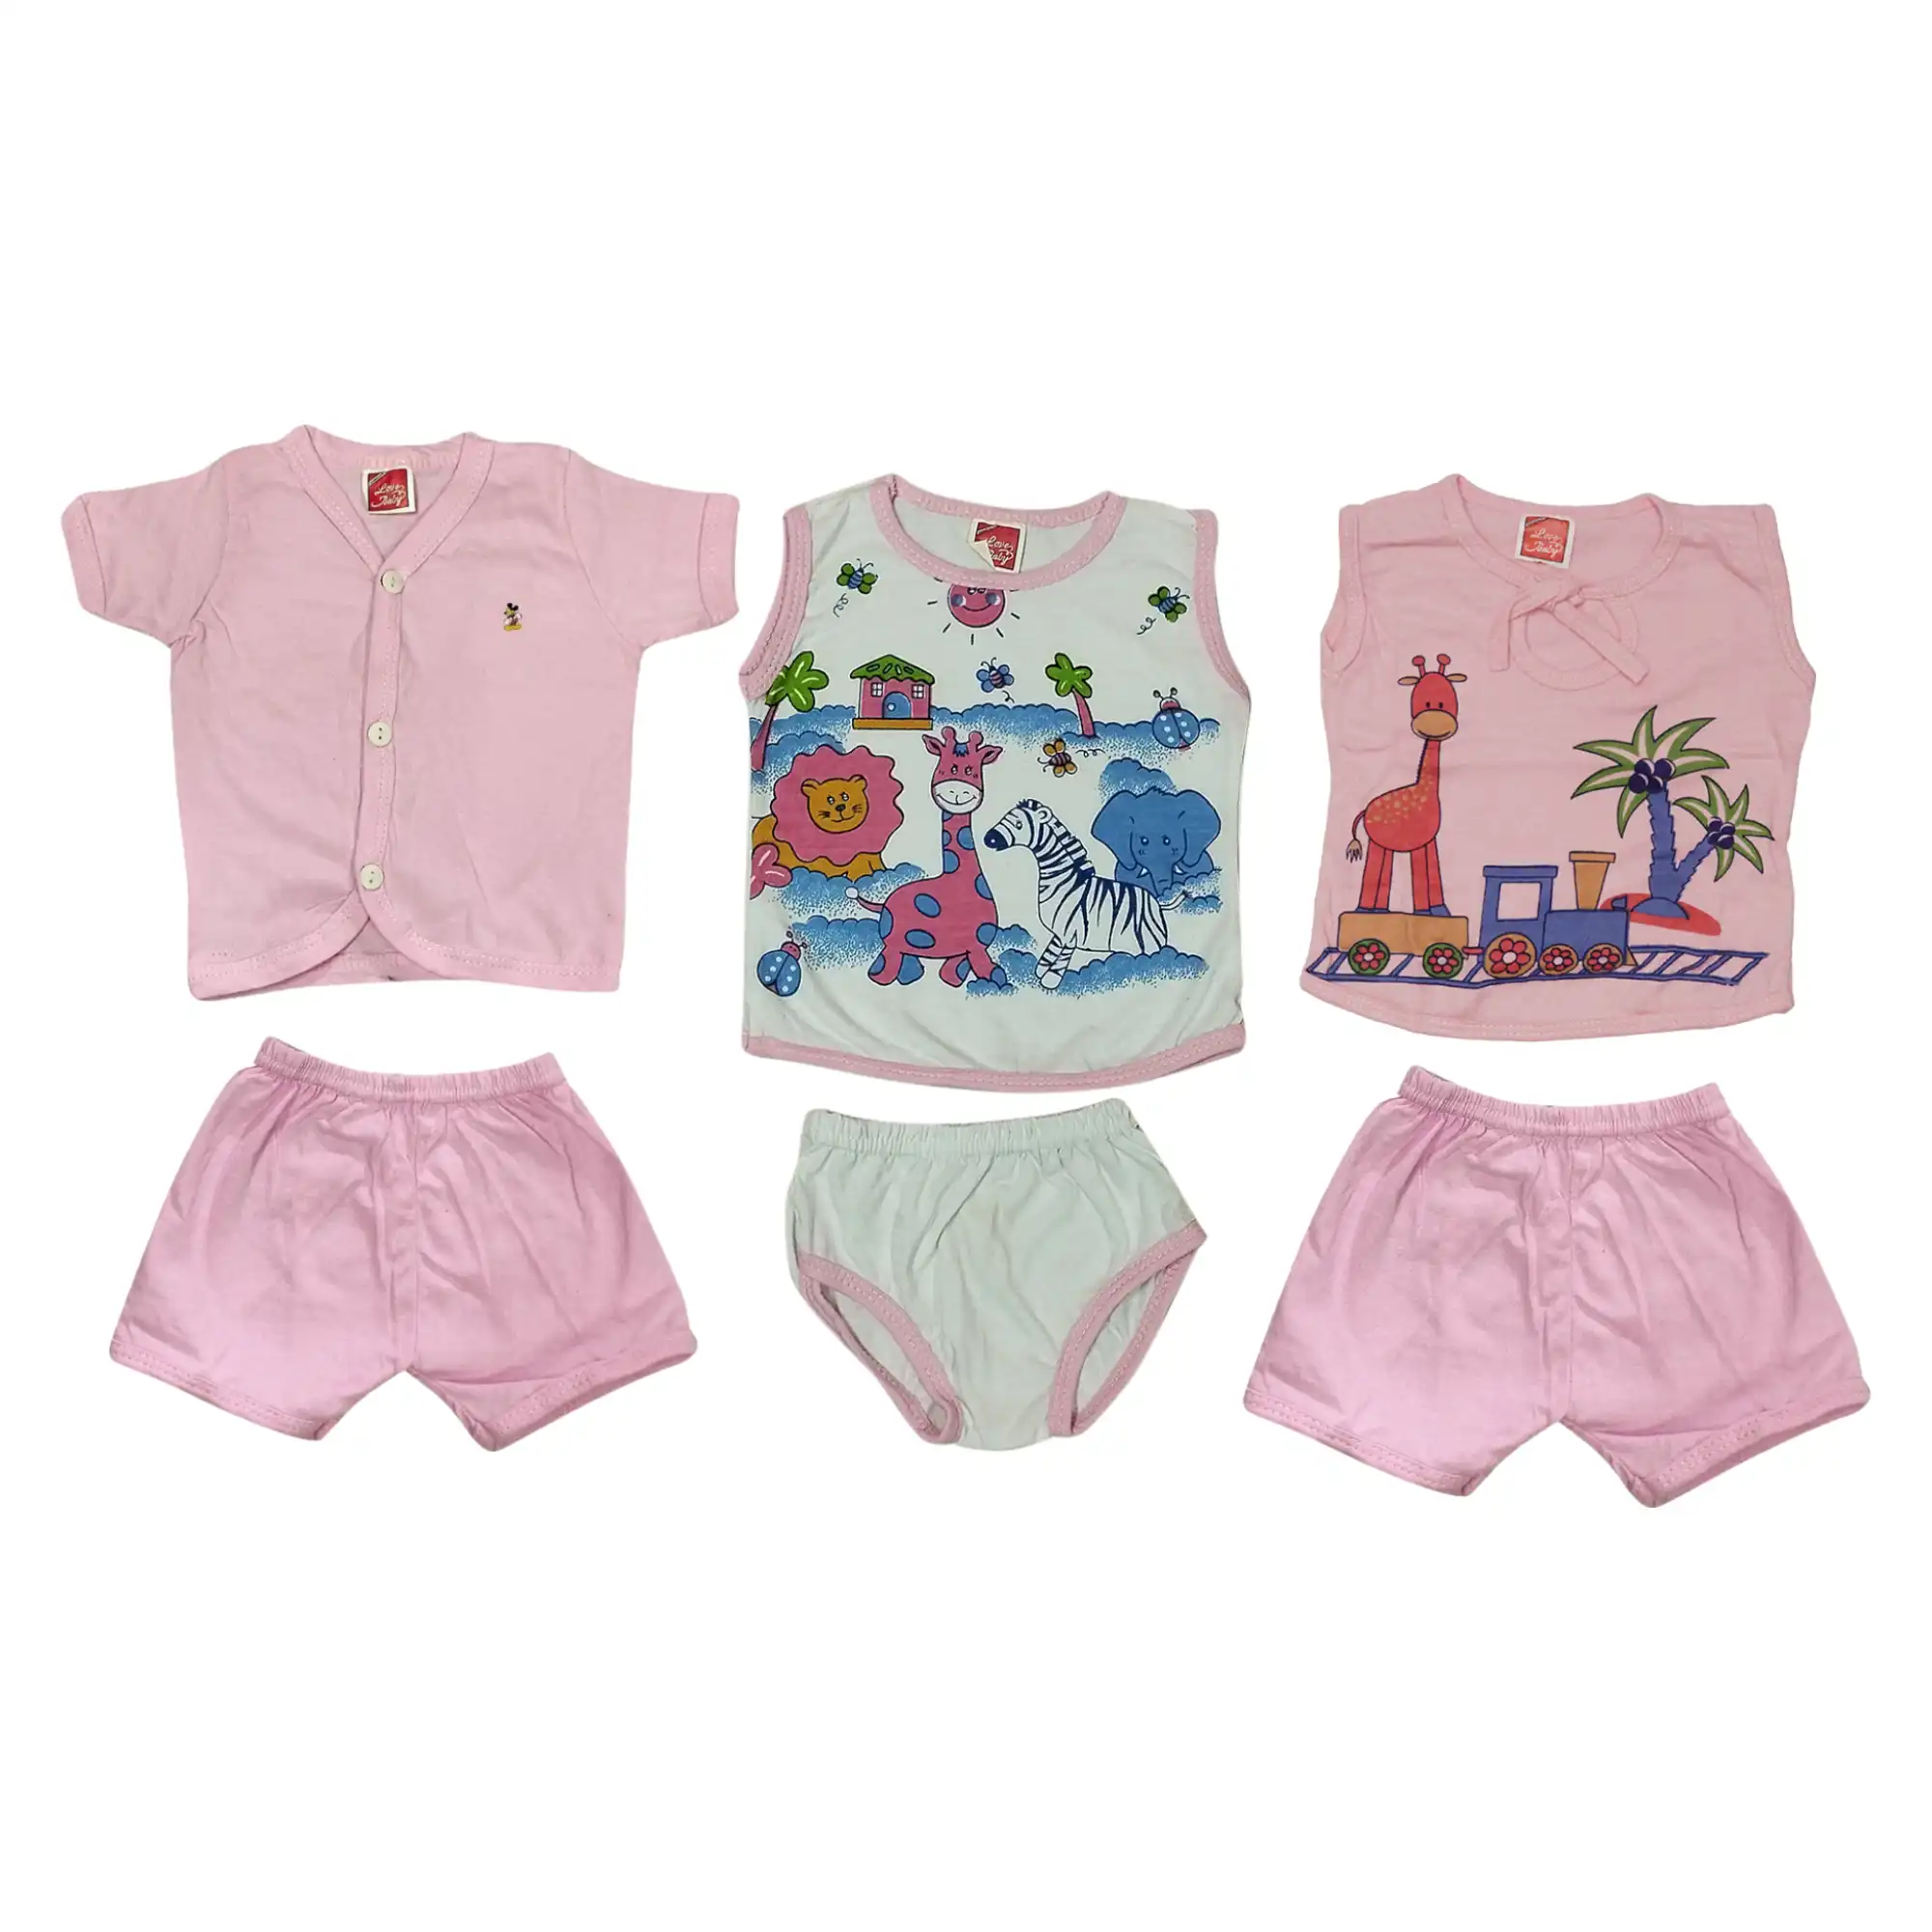 Newborn Baby Clothing Set of 3 Pink 3